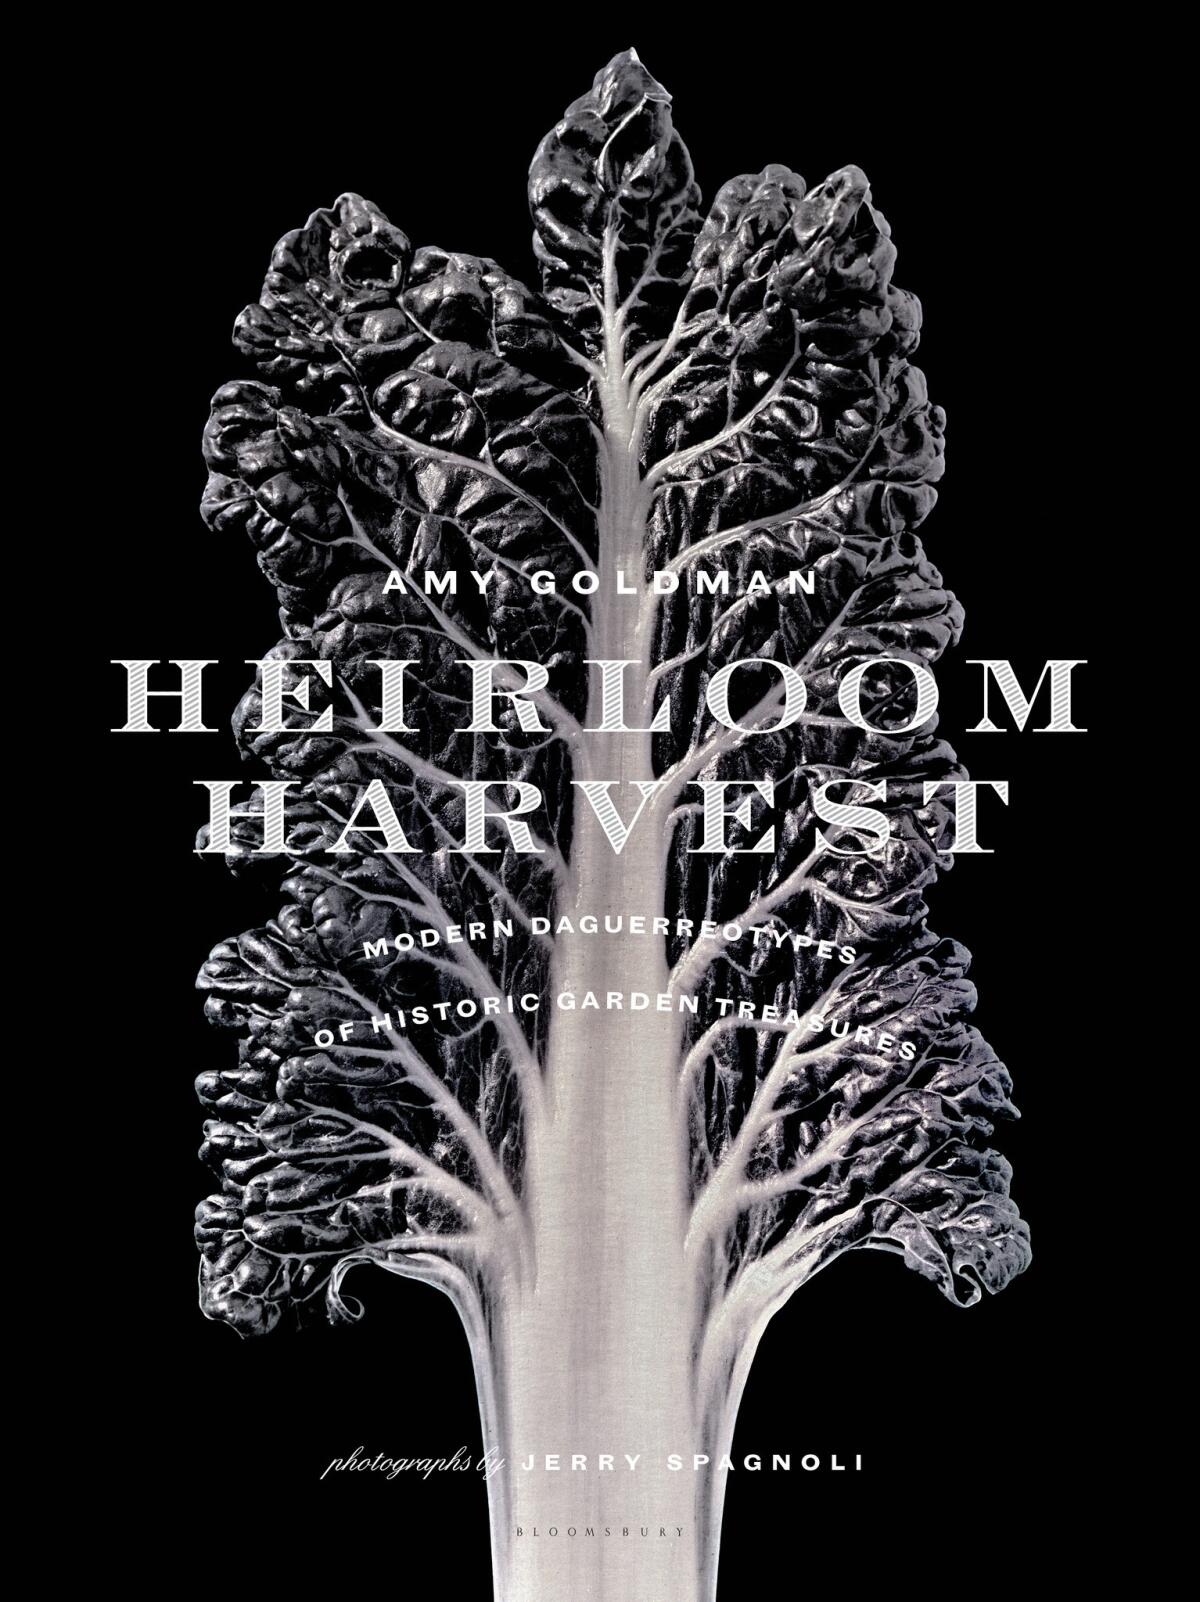 "Heirloom Harvest" by Amy Goldman and Jerry Spagnoli